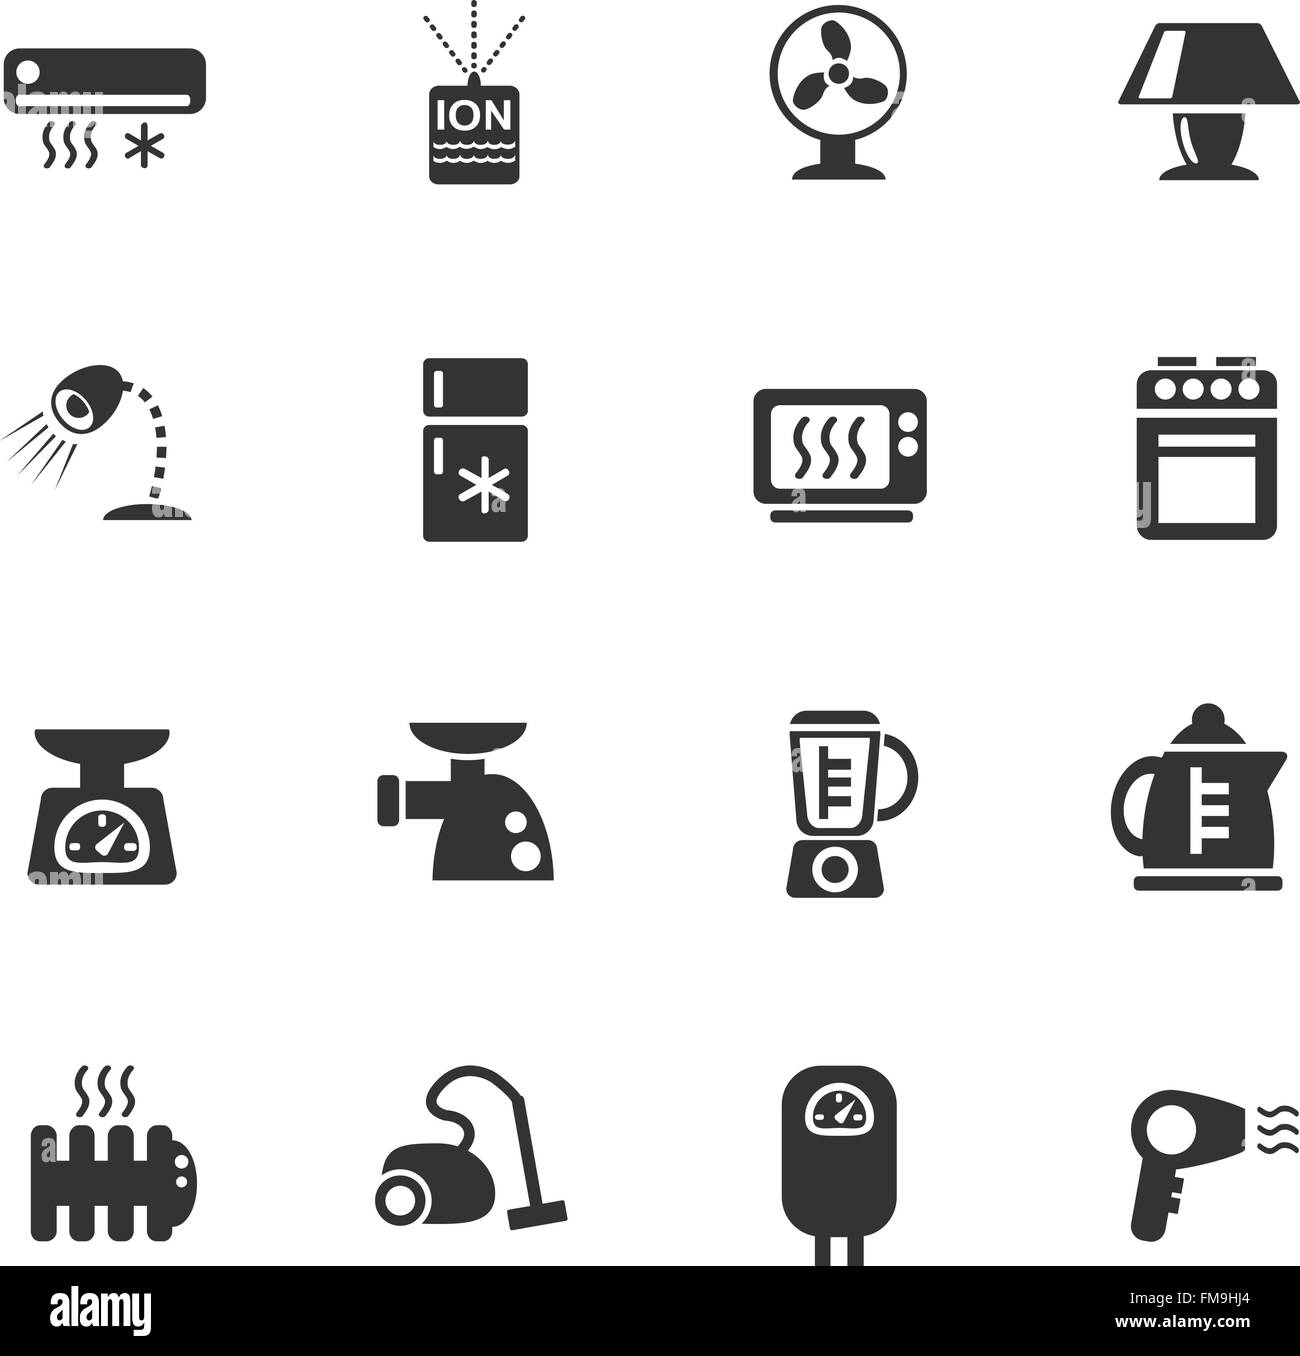 Haushaltsgeräte web Icons für User Interfacedesign Stock Vektor